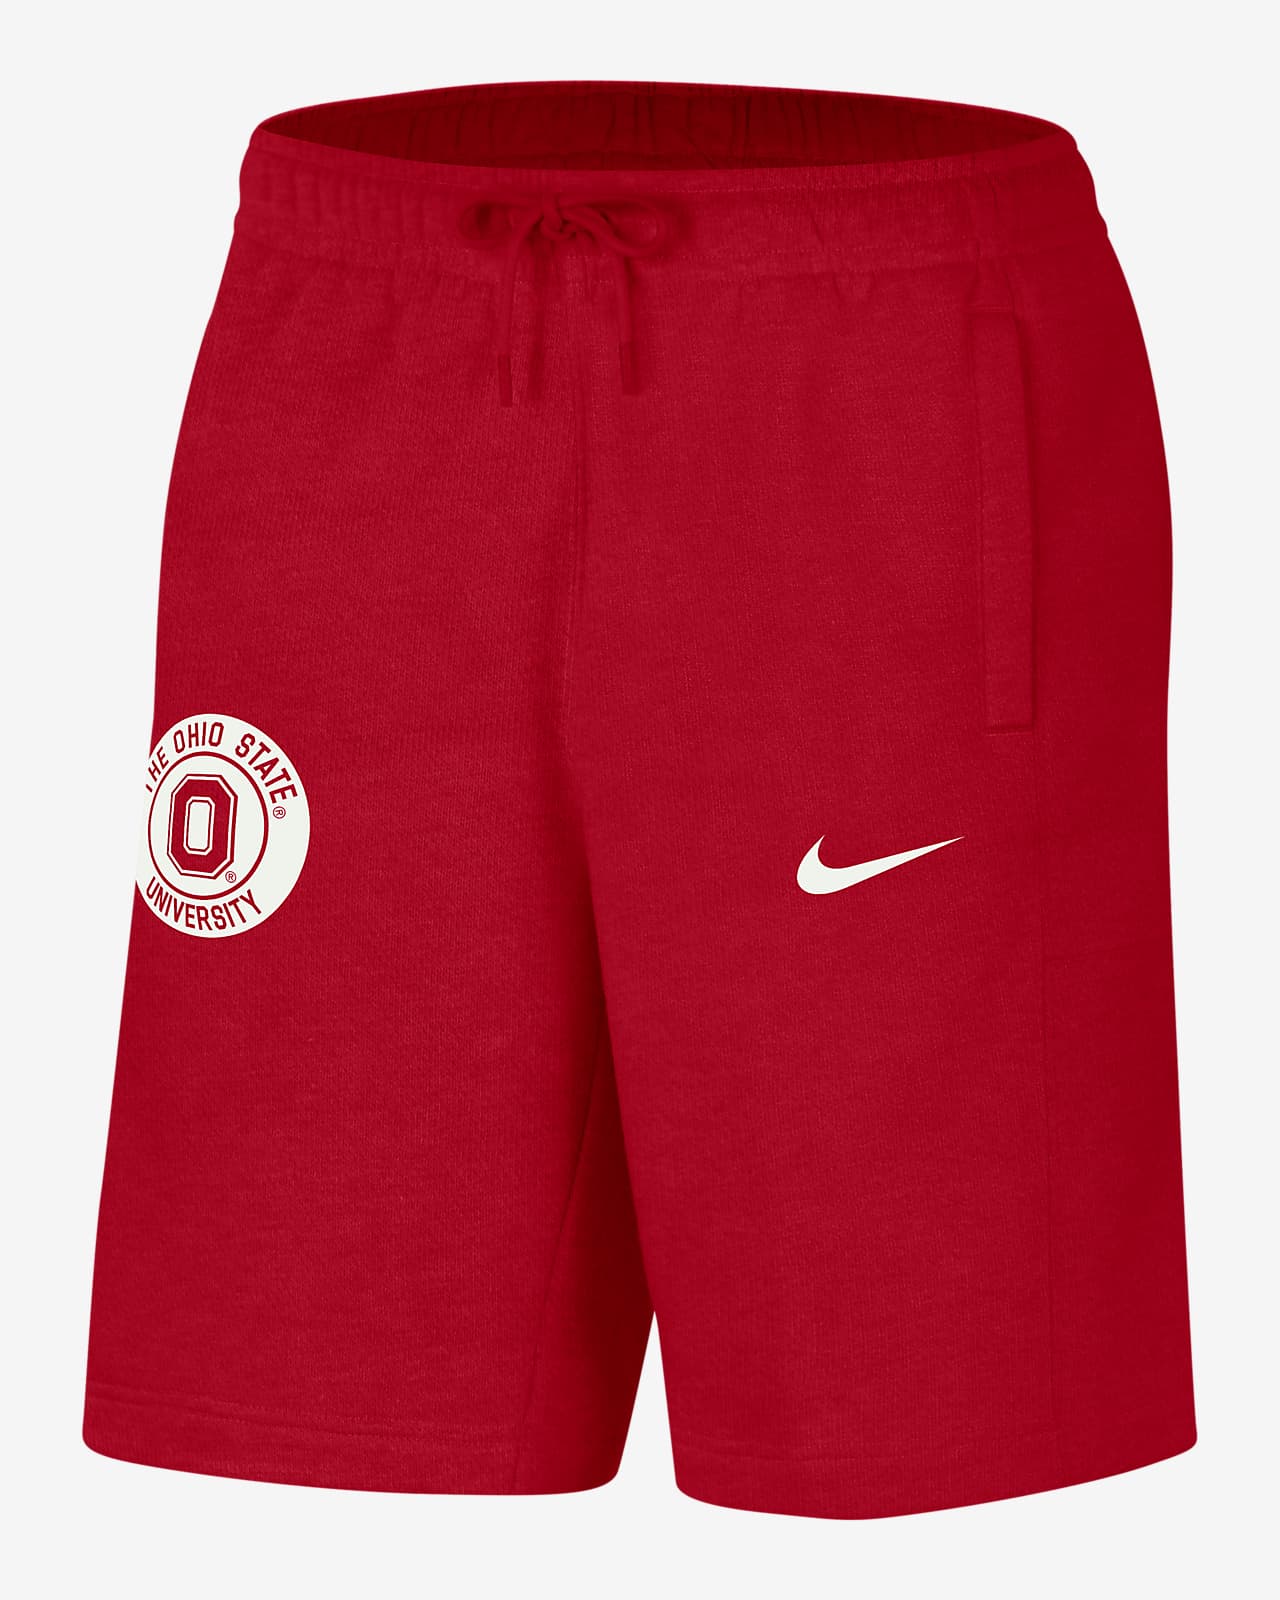 Ohio State Men's Nike College Shorts